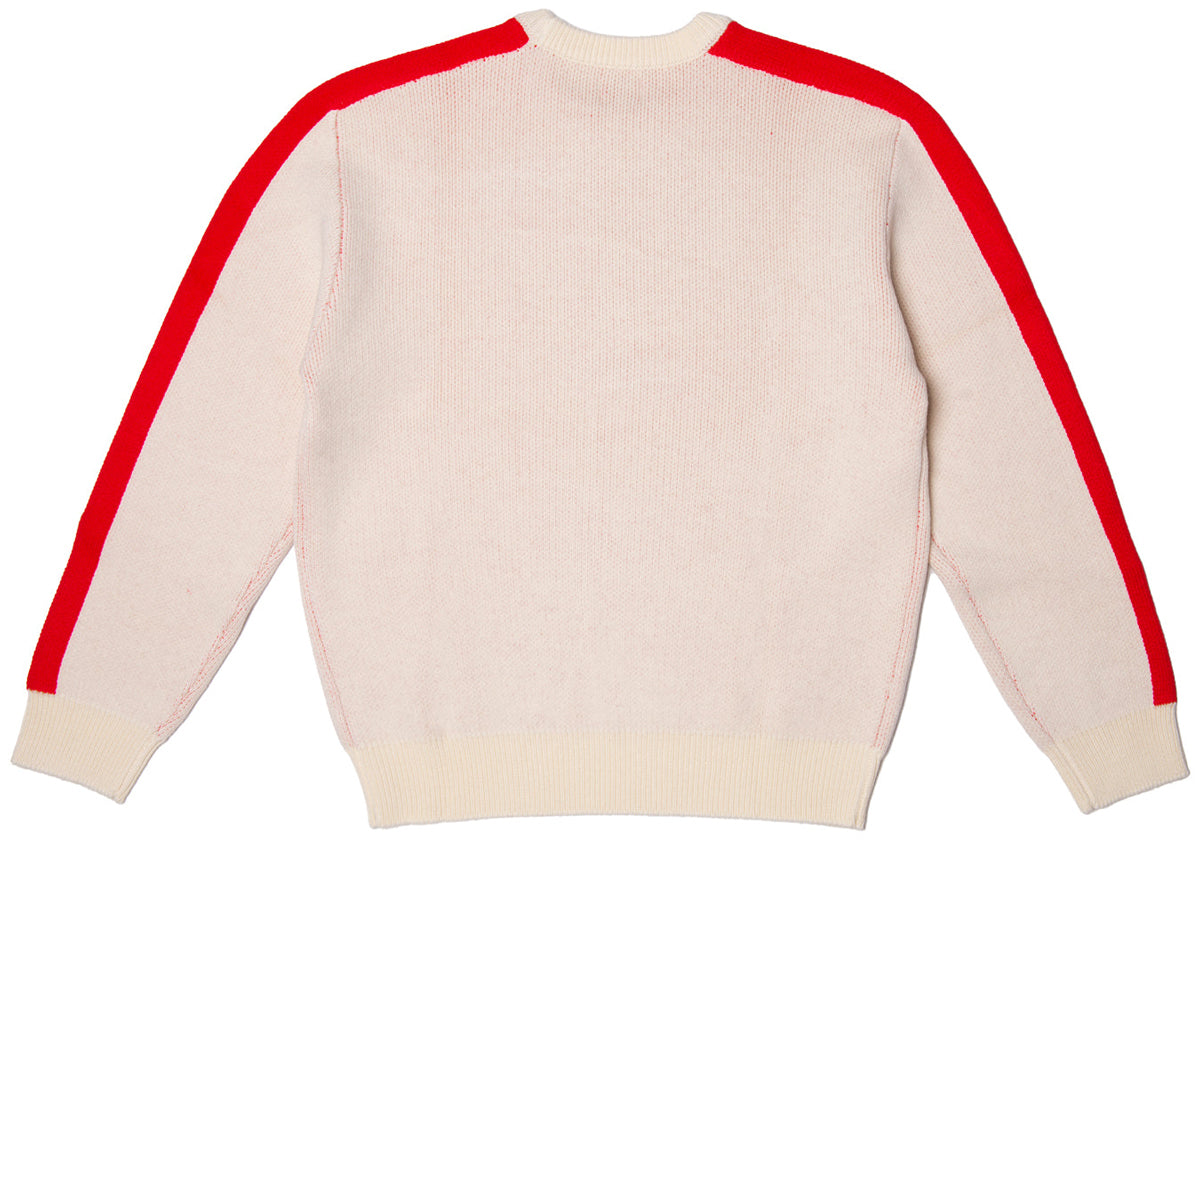 Hoddle Warped Logo Knit Long Sleeve Shirt - Ecru/Red image 3